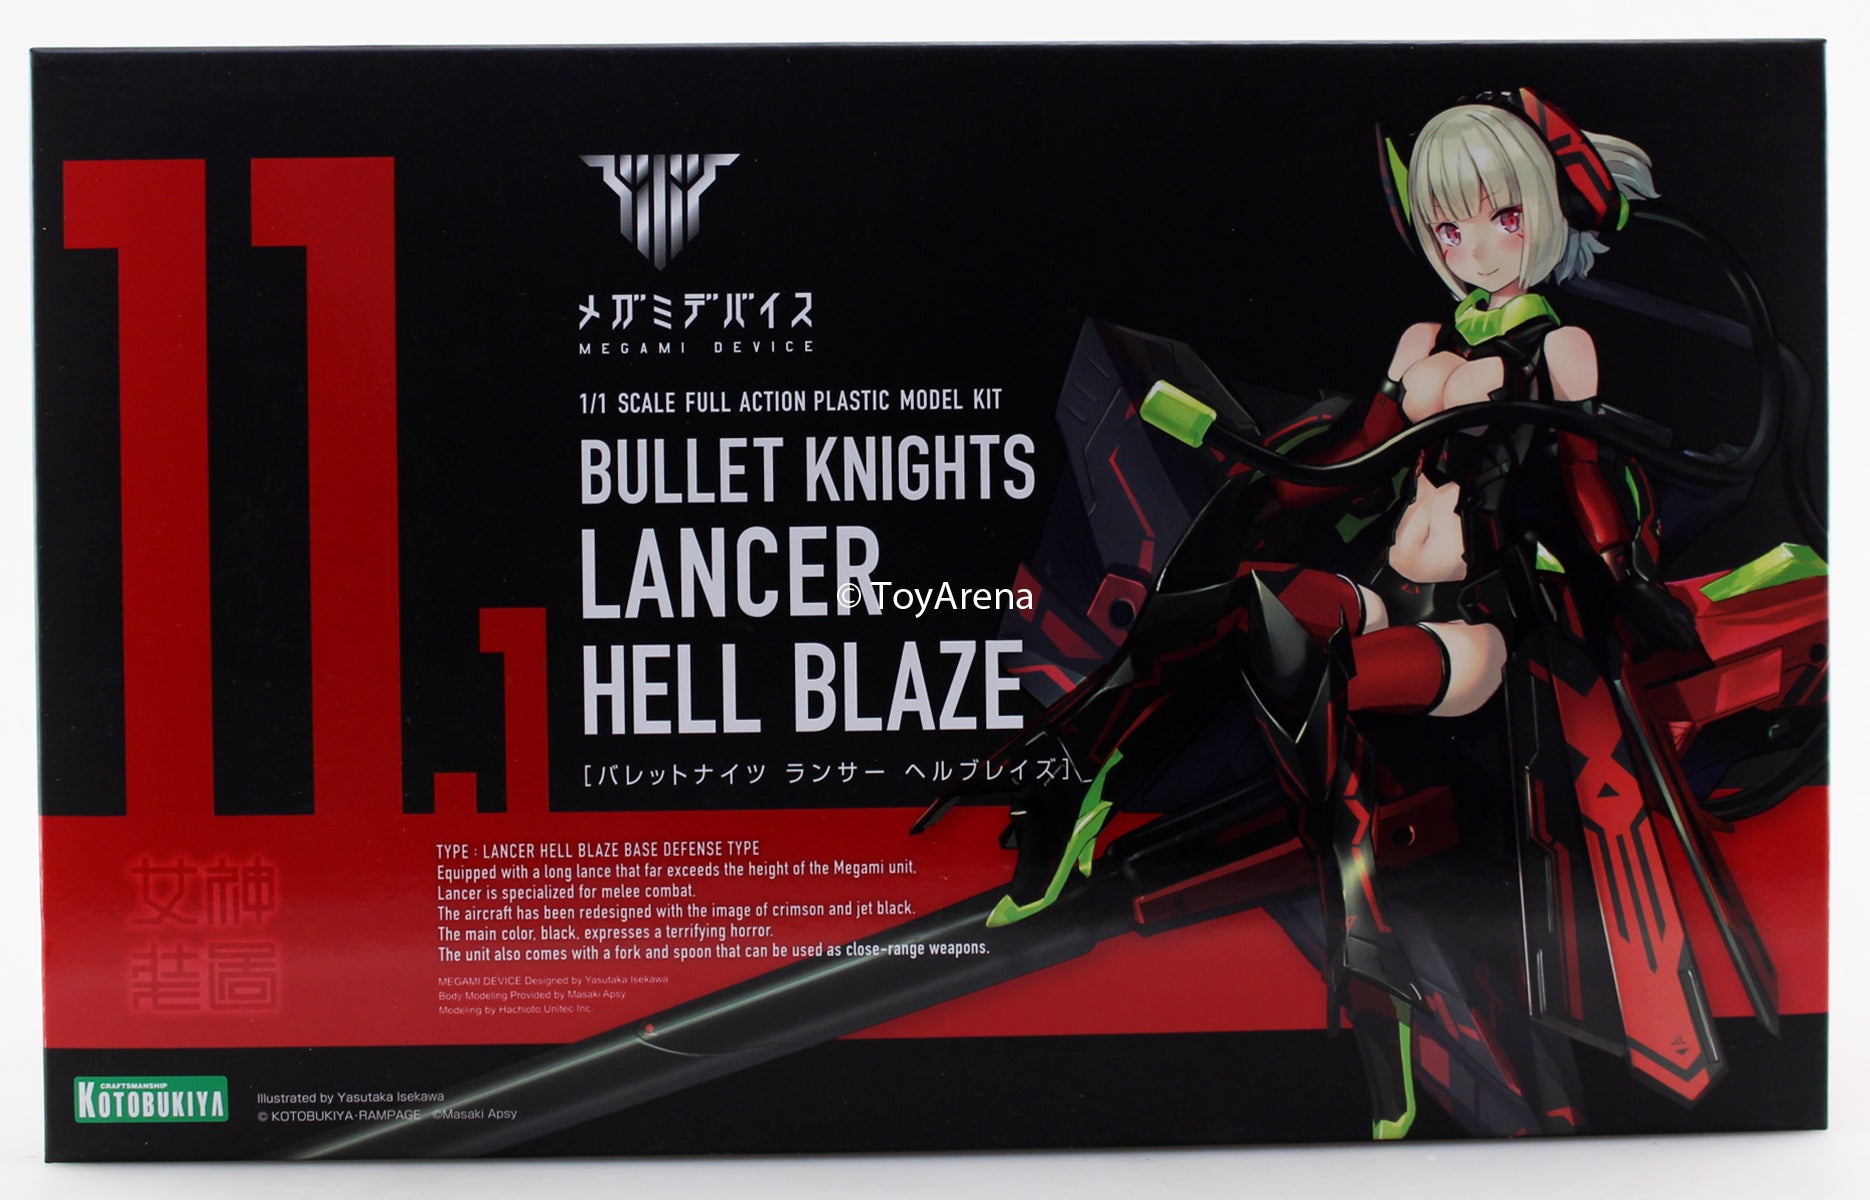 Kotobukiya Megami Device #11.1 Bullet Knights Lancer Hell Blaze KP528